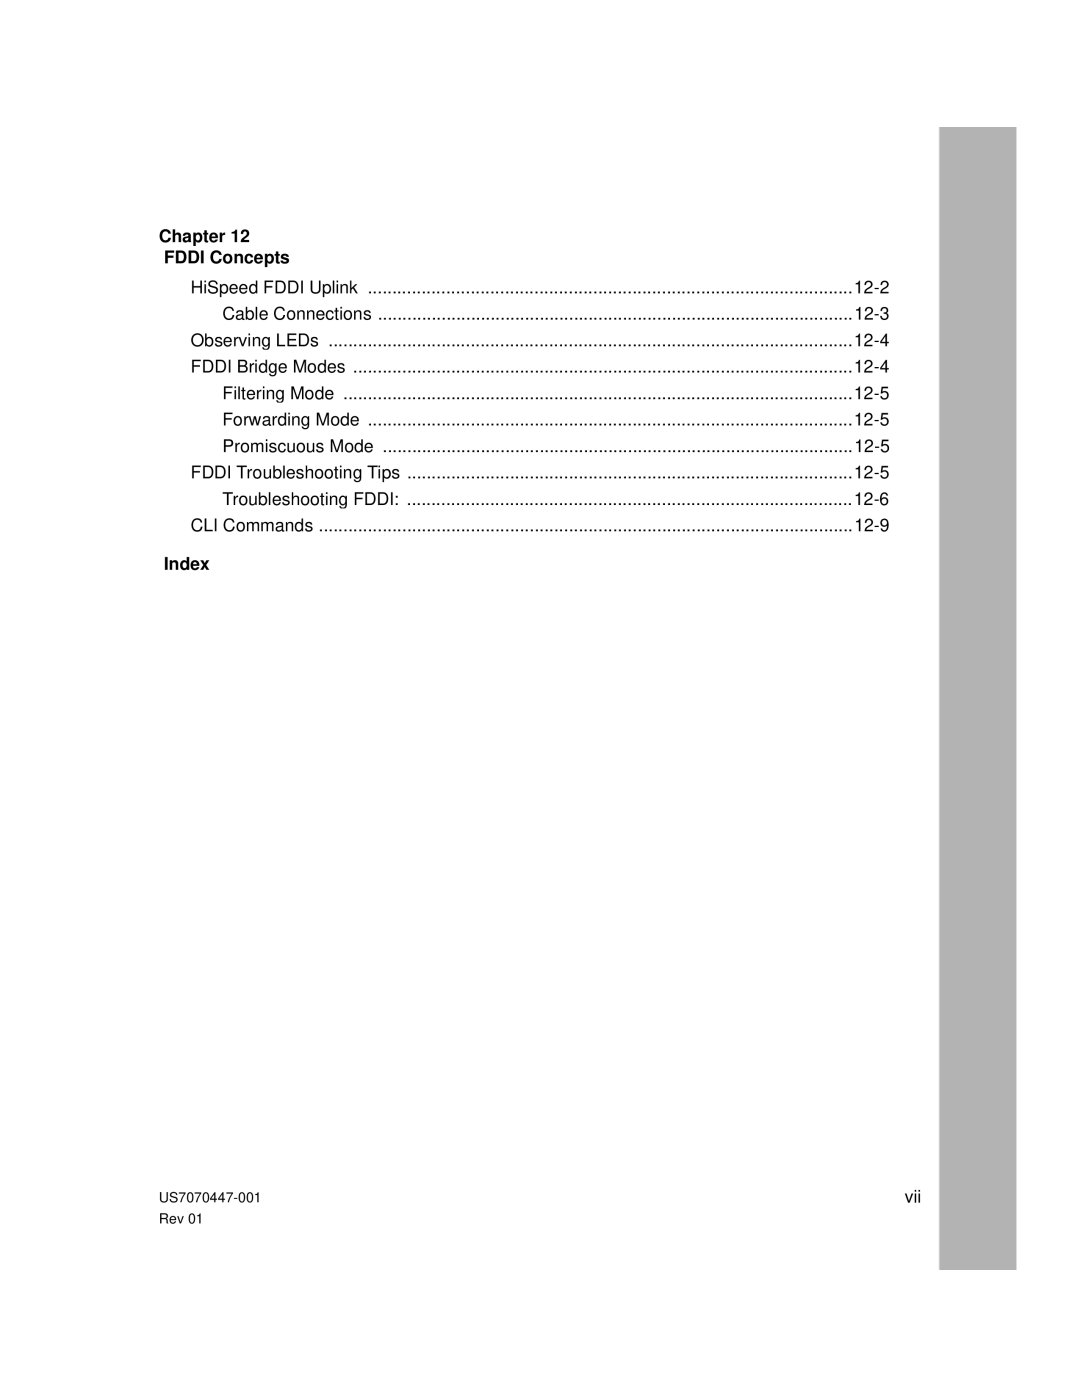 Hitachi US7070447-001 manual Chapter, FDDI Concepts, Index 